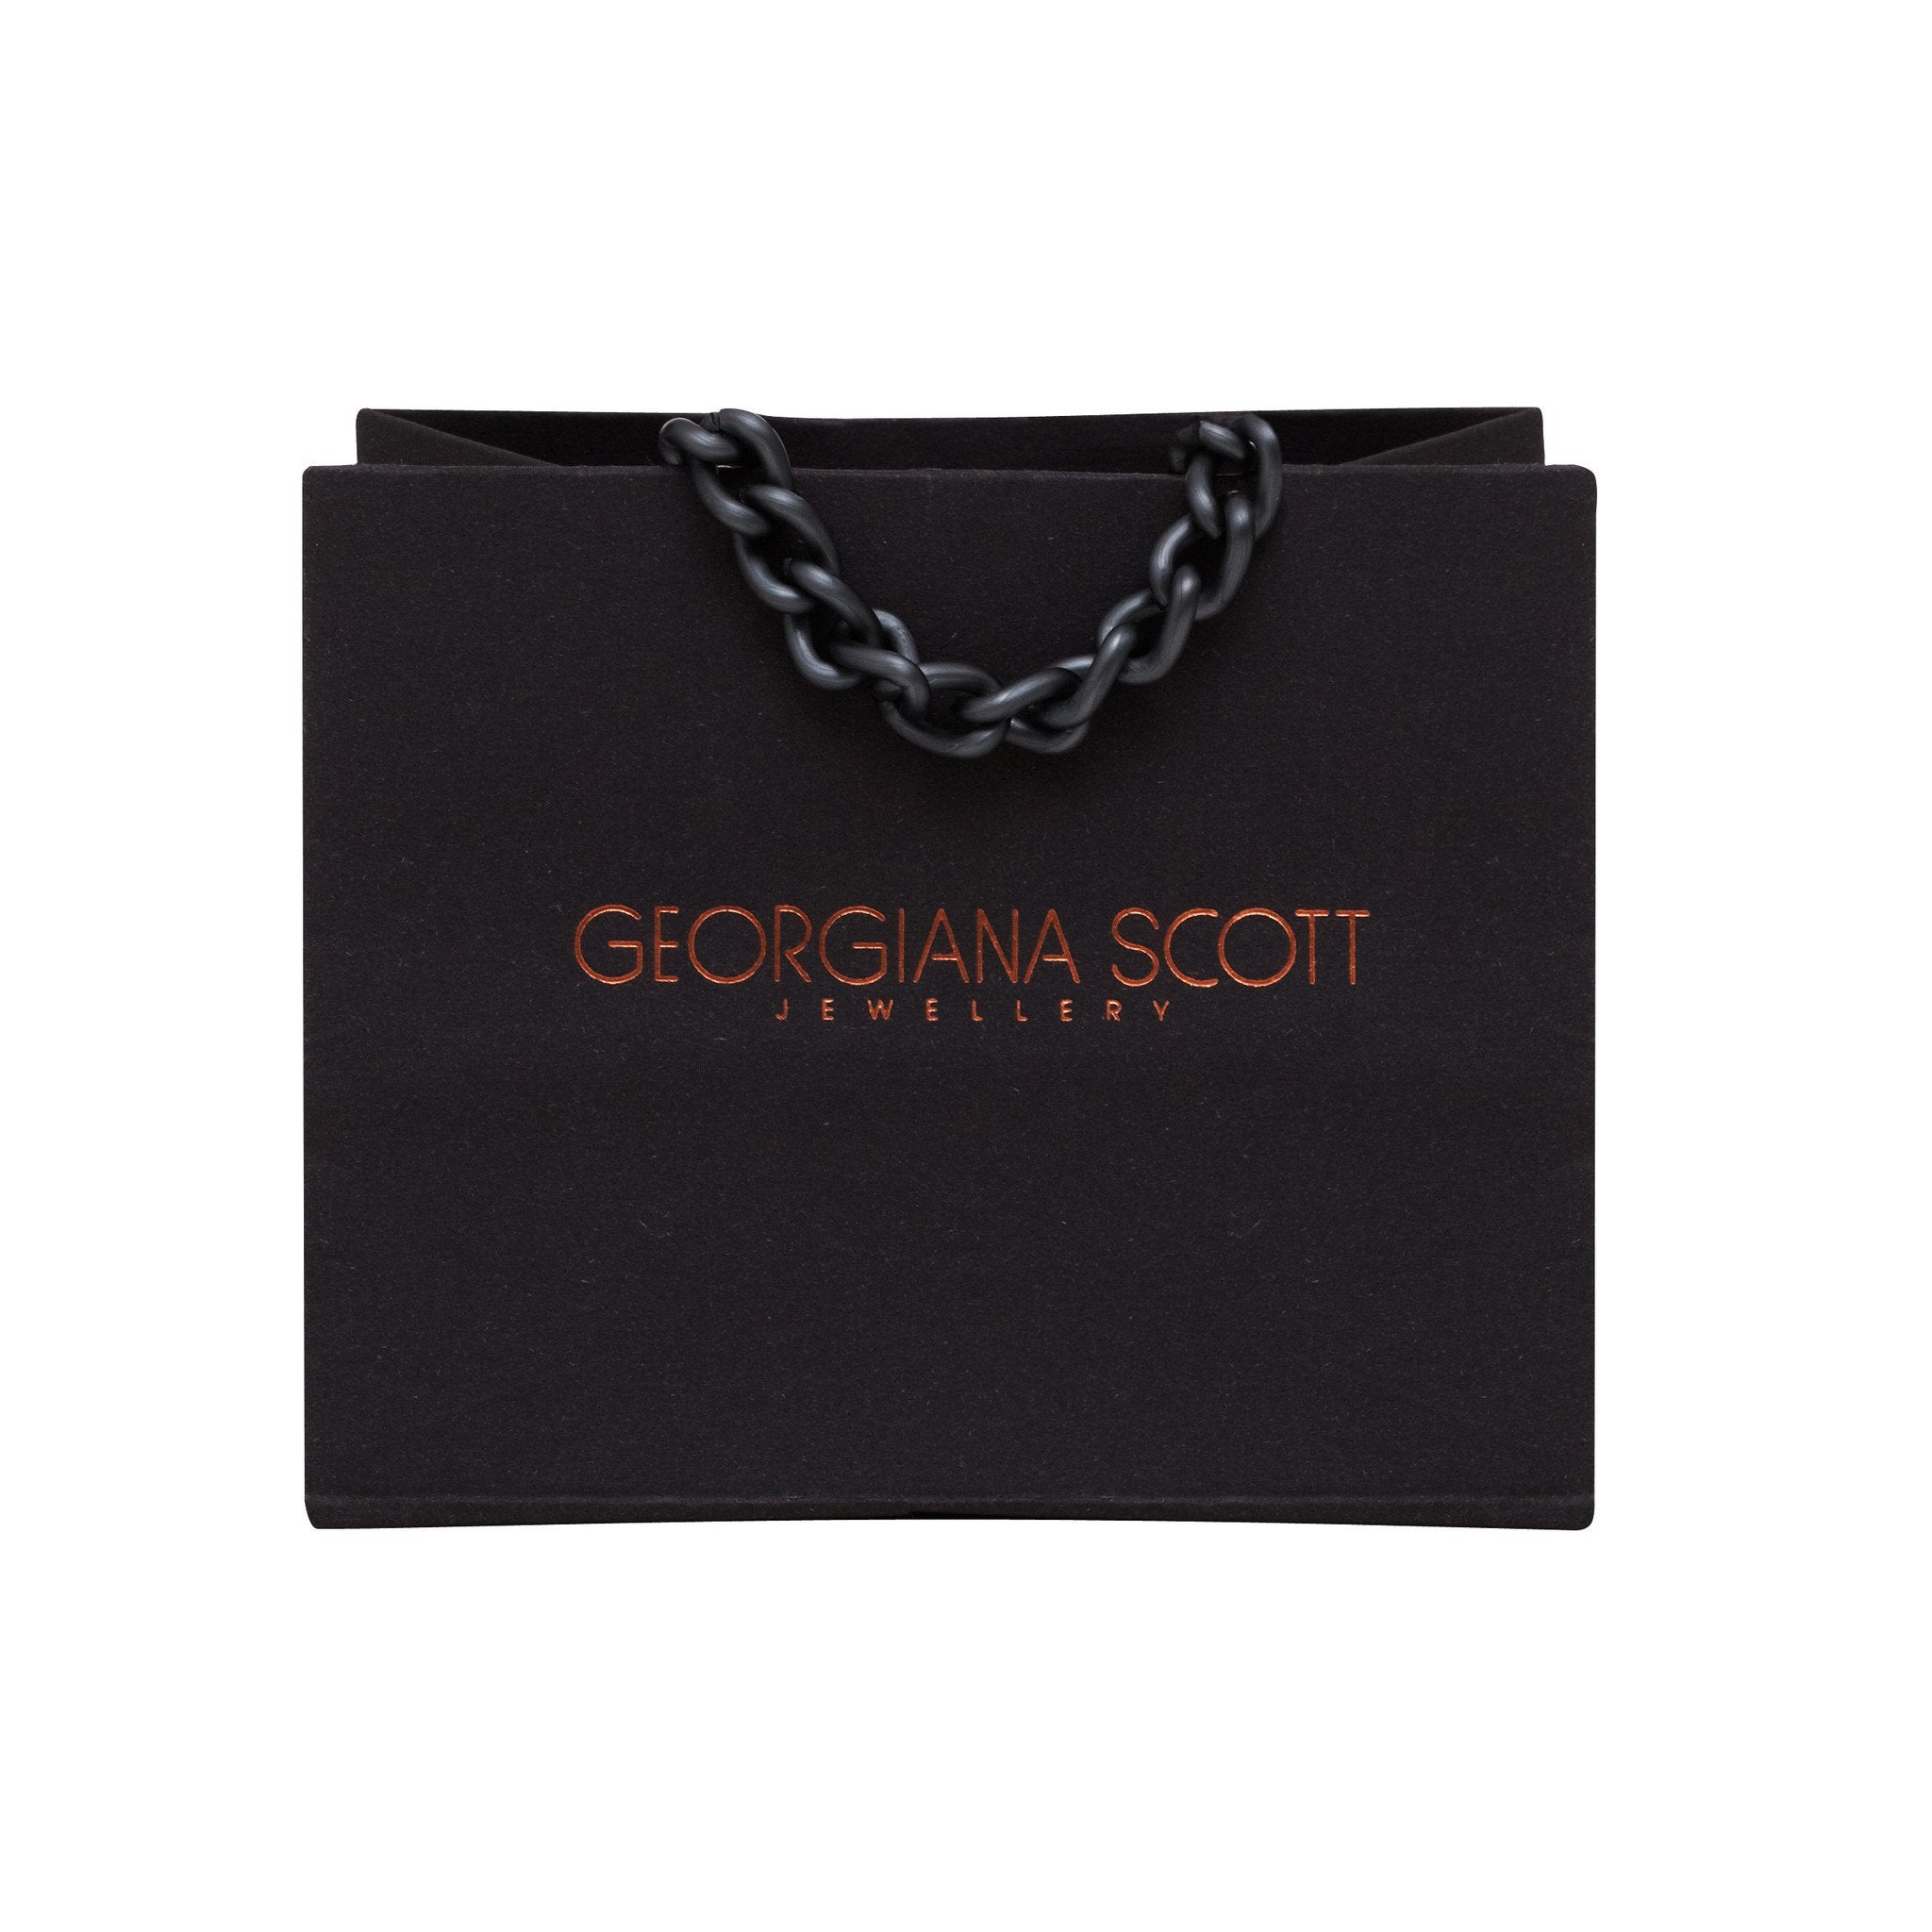 La ORO 18ct Huggies - Gold - Georgiana Scott Jewellery